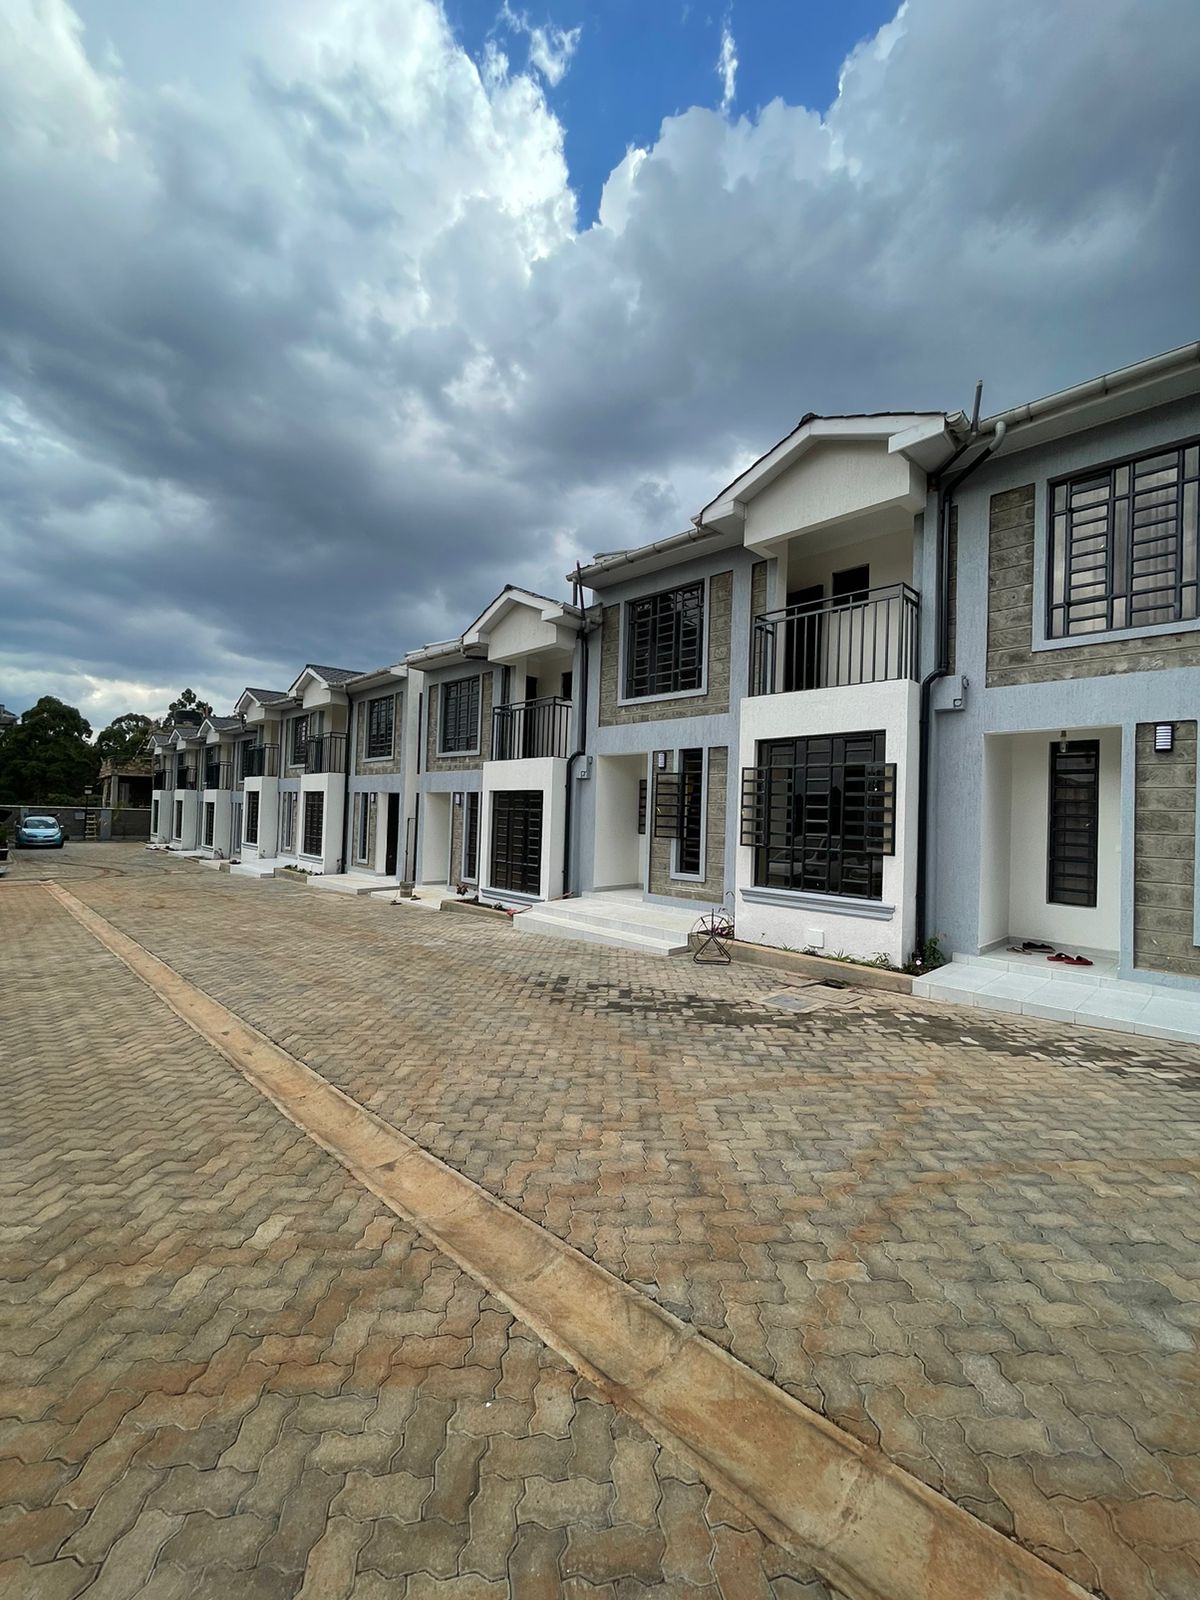 3 bedroom Maisonette for sale at 9M in Gikambura, Kikuyu. Has payment plan; Cash or Mortgage, Deposit 1M. Musilli Homes